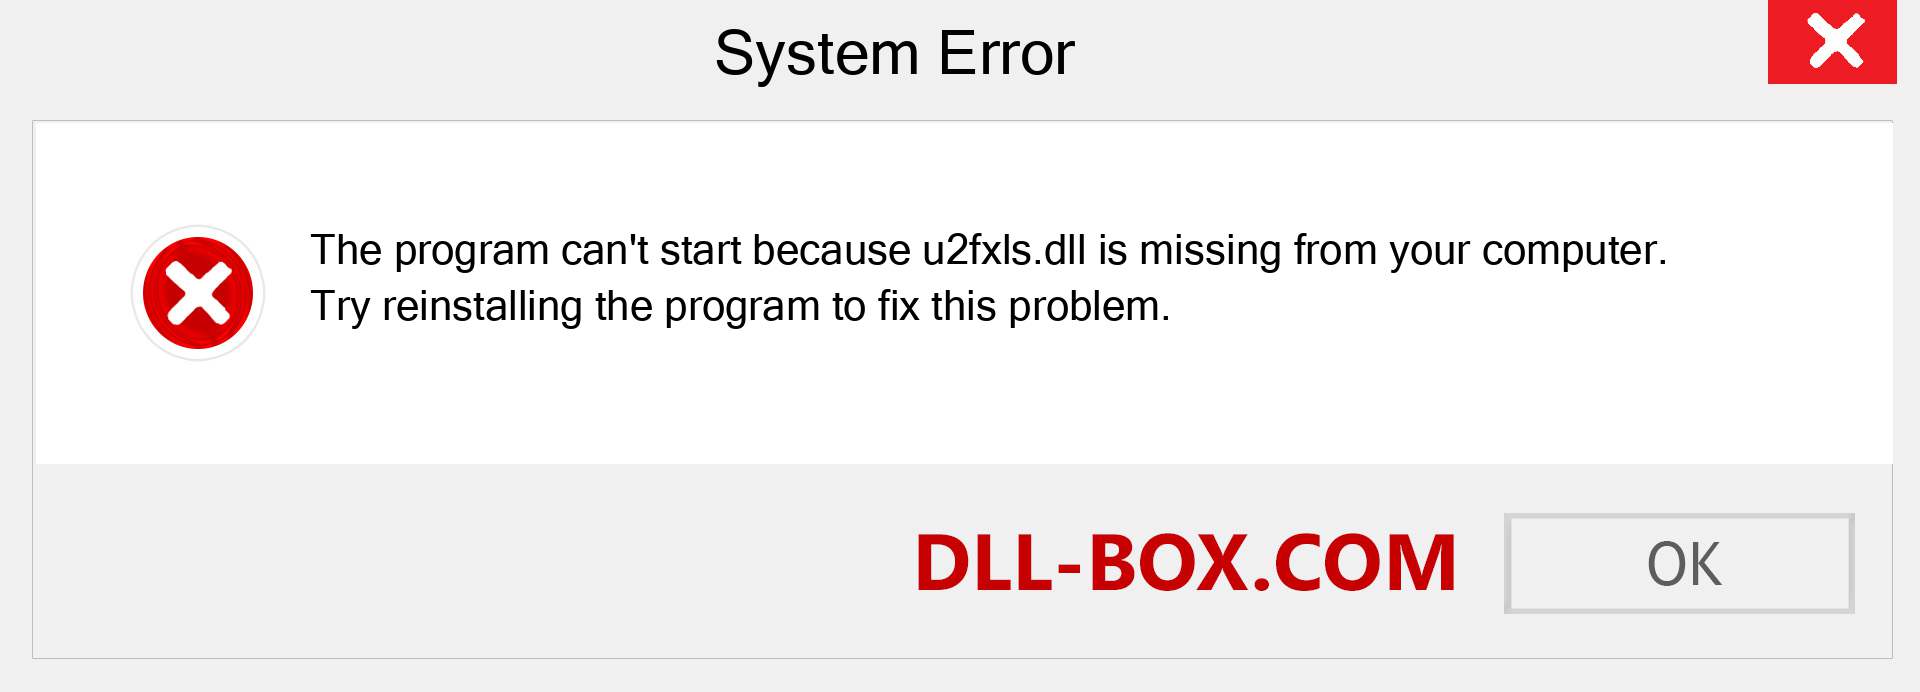  u2fxls.dll file is missing?. Download for Windows 7, 8, 10 - Fix  u2fxls dll Missing Error on Windows, photos, images